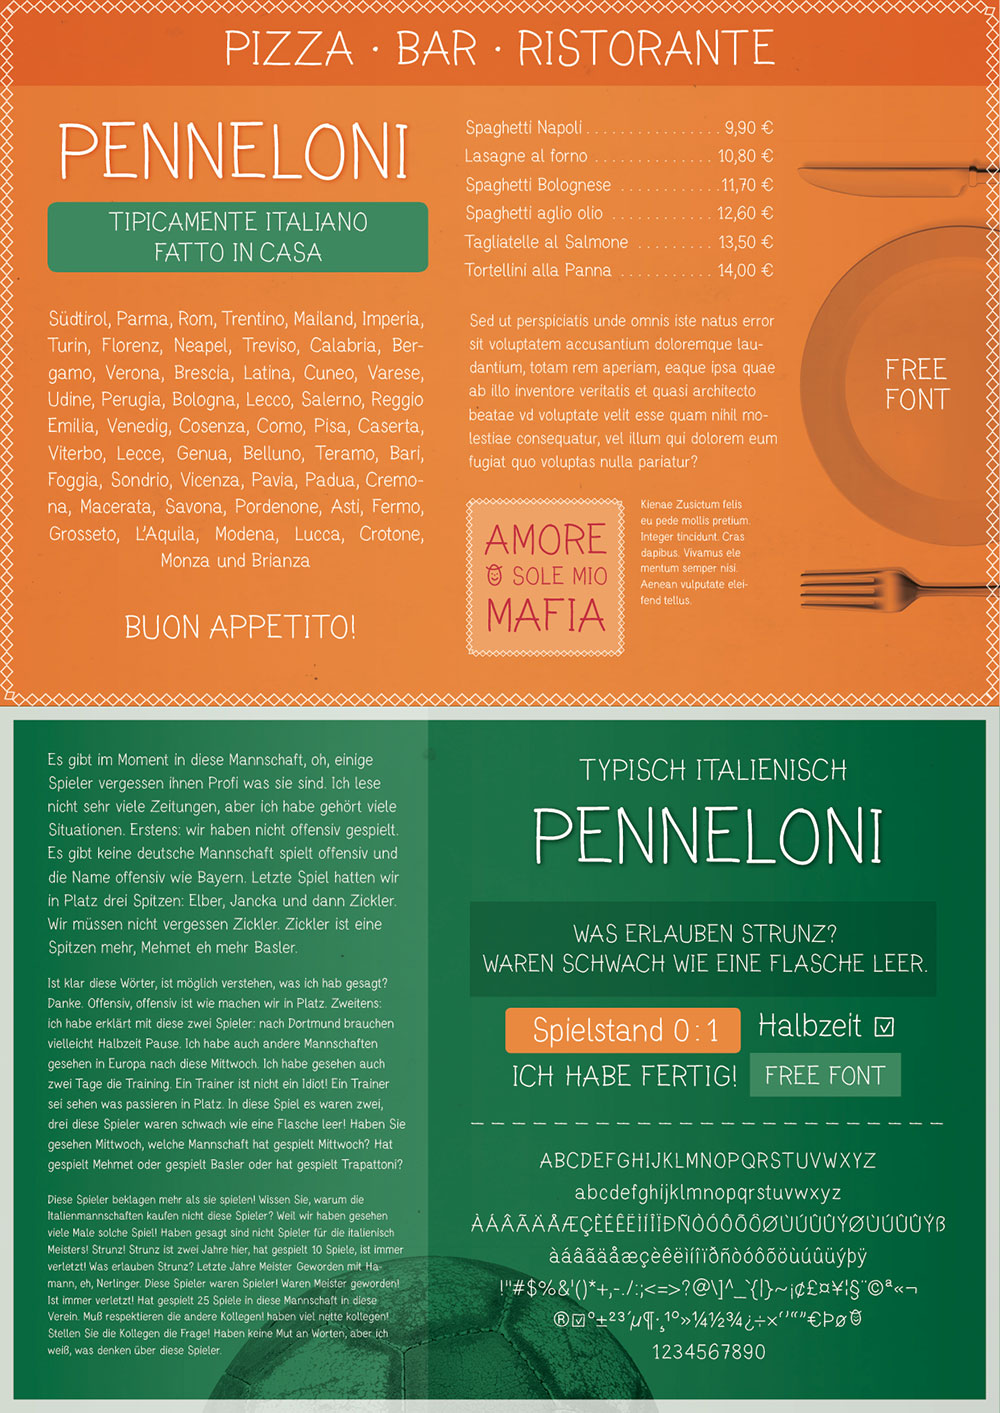 Penneloni - Free Font - Fontsheet